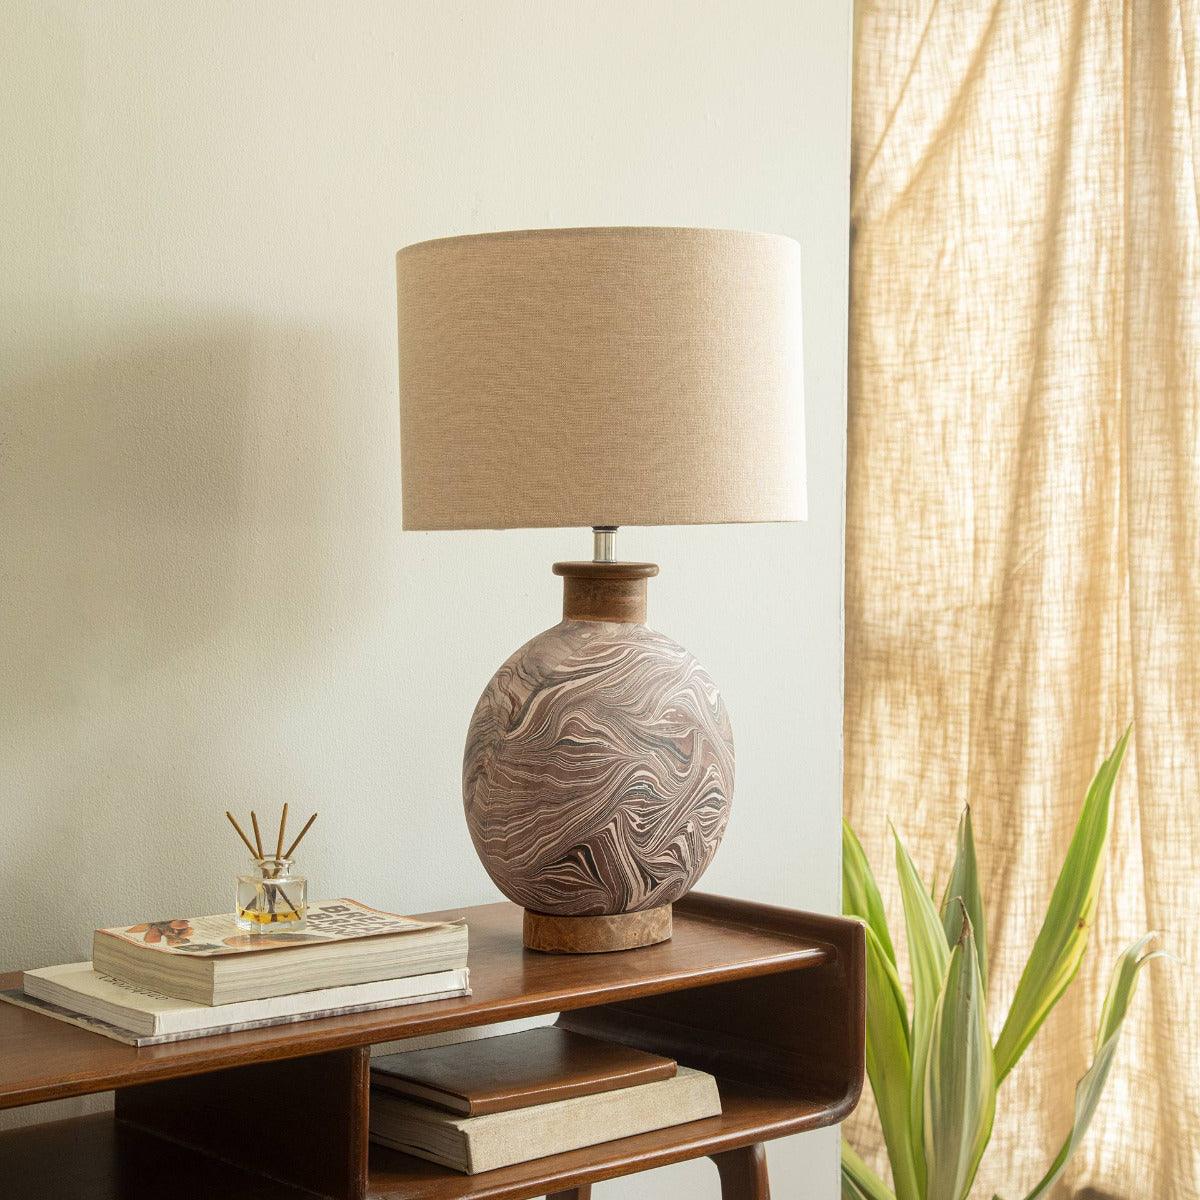 Gaiyo Table Lamp with Shade